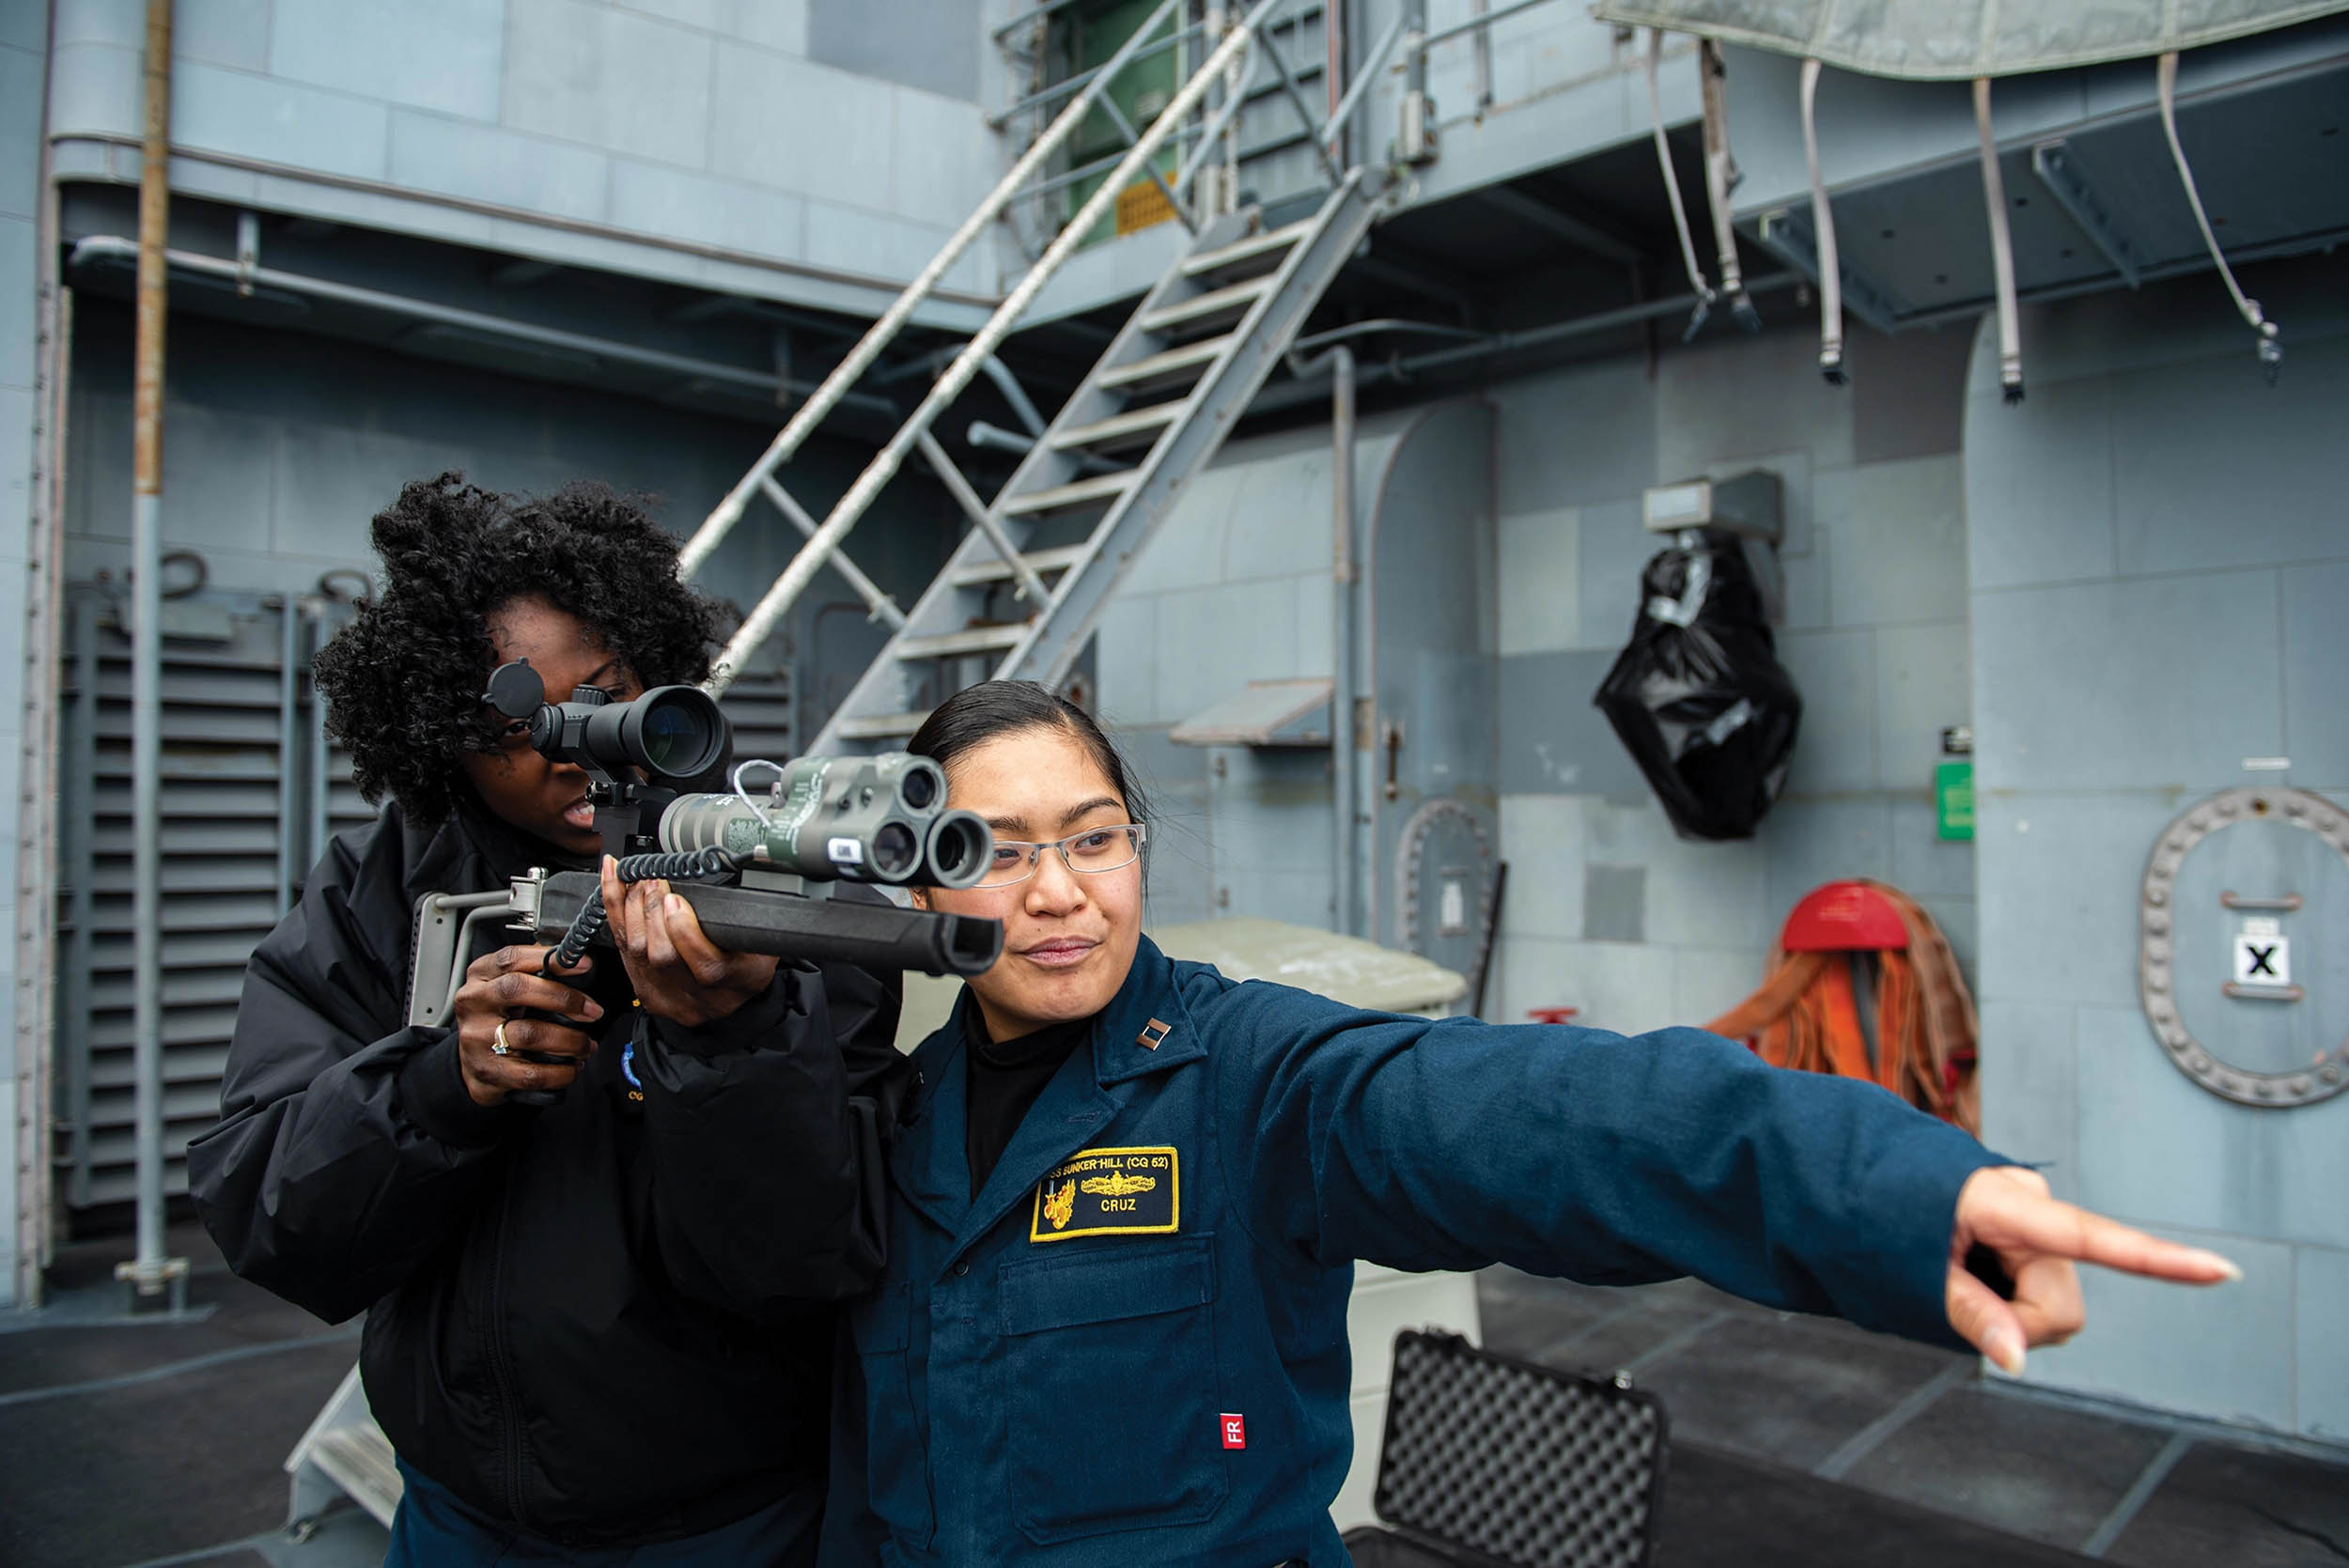 Lieutenant Joanna Cruz, right, gives laser dazzler gun training to Quartermaster 1st Class Kahzia Johnson-Baker, aboard USS Bunker Hill, Pacific Ocean, January 24, 2020 (U.S. Navy/Nicholas V. Huynh)